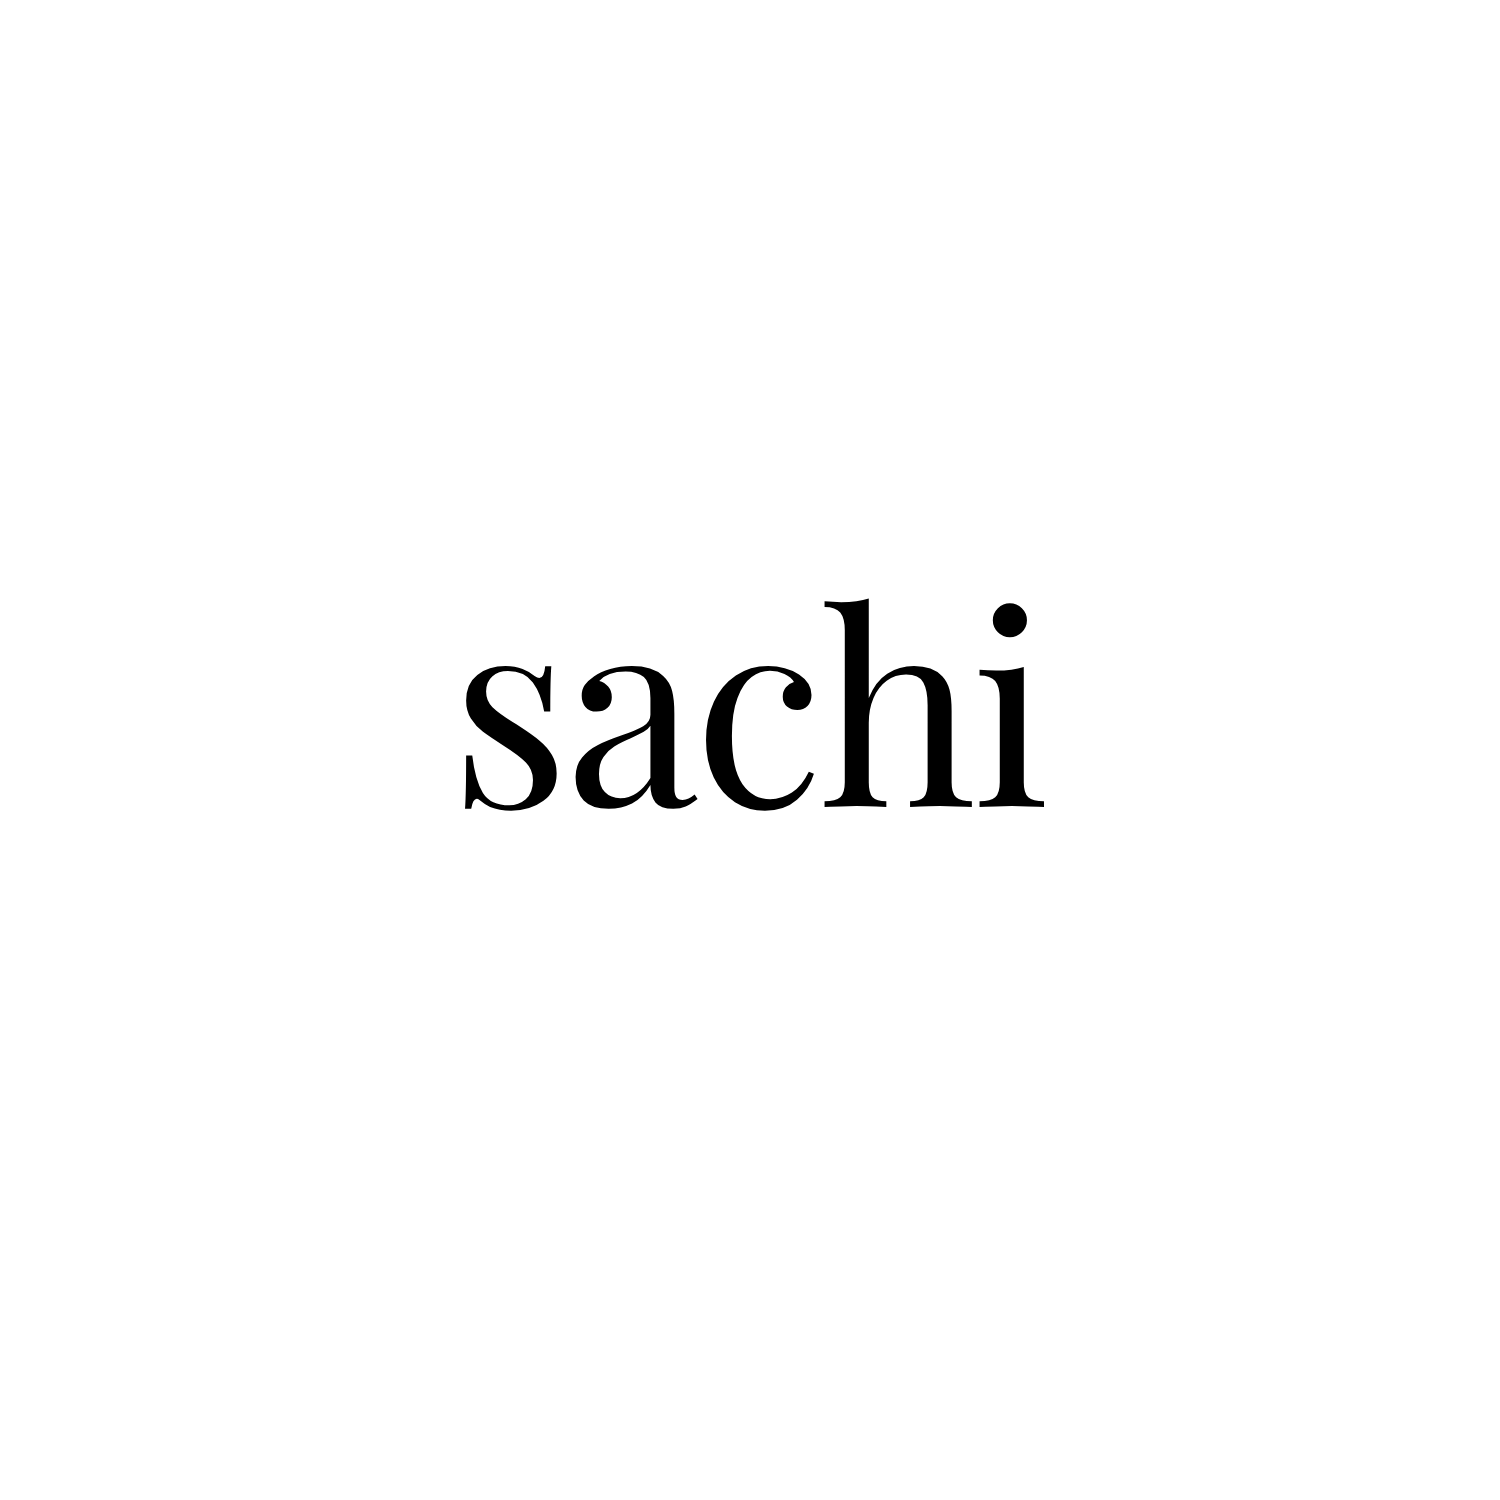 SACHI